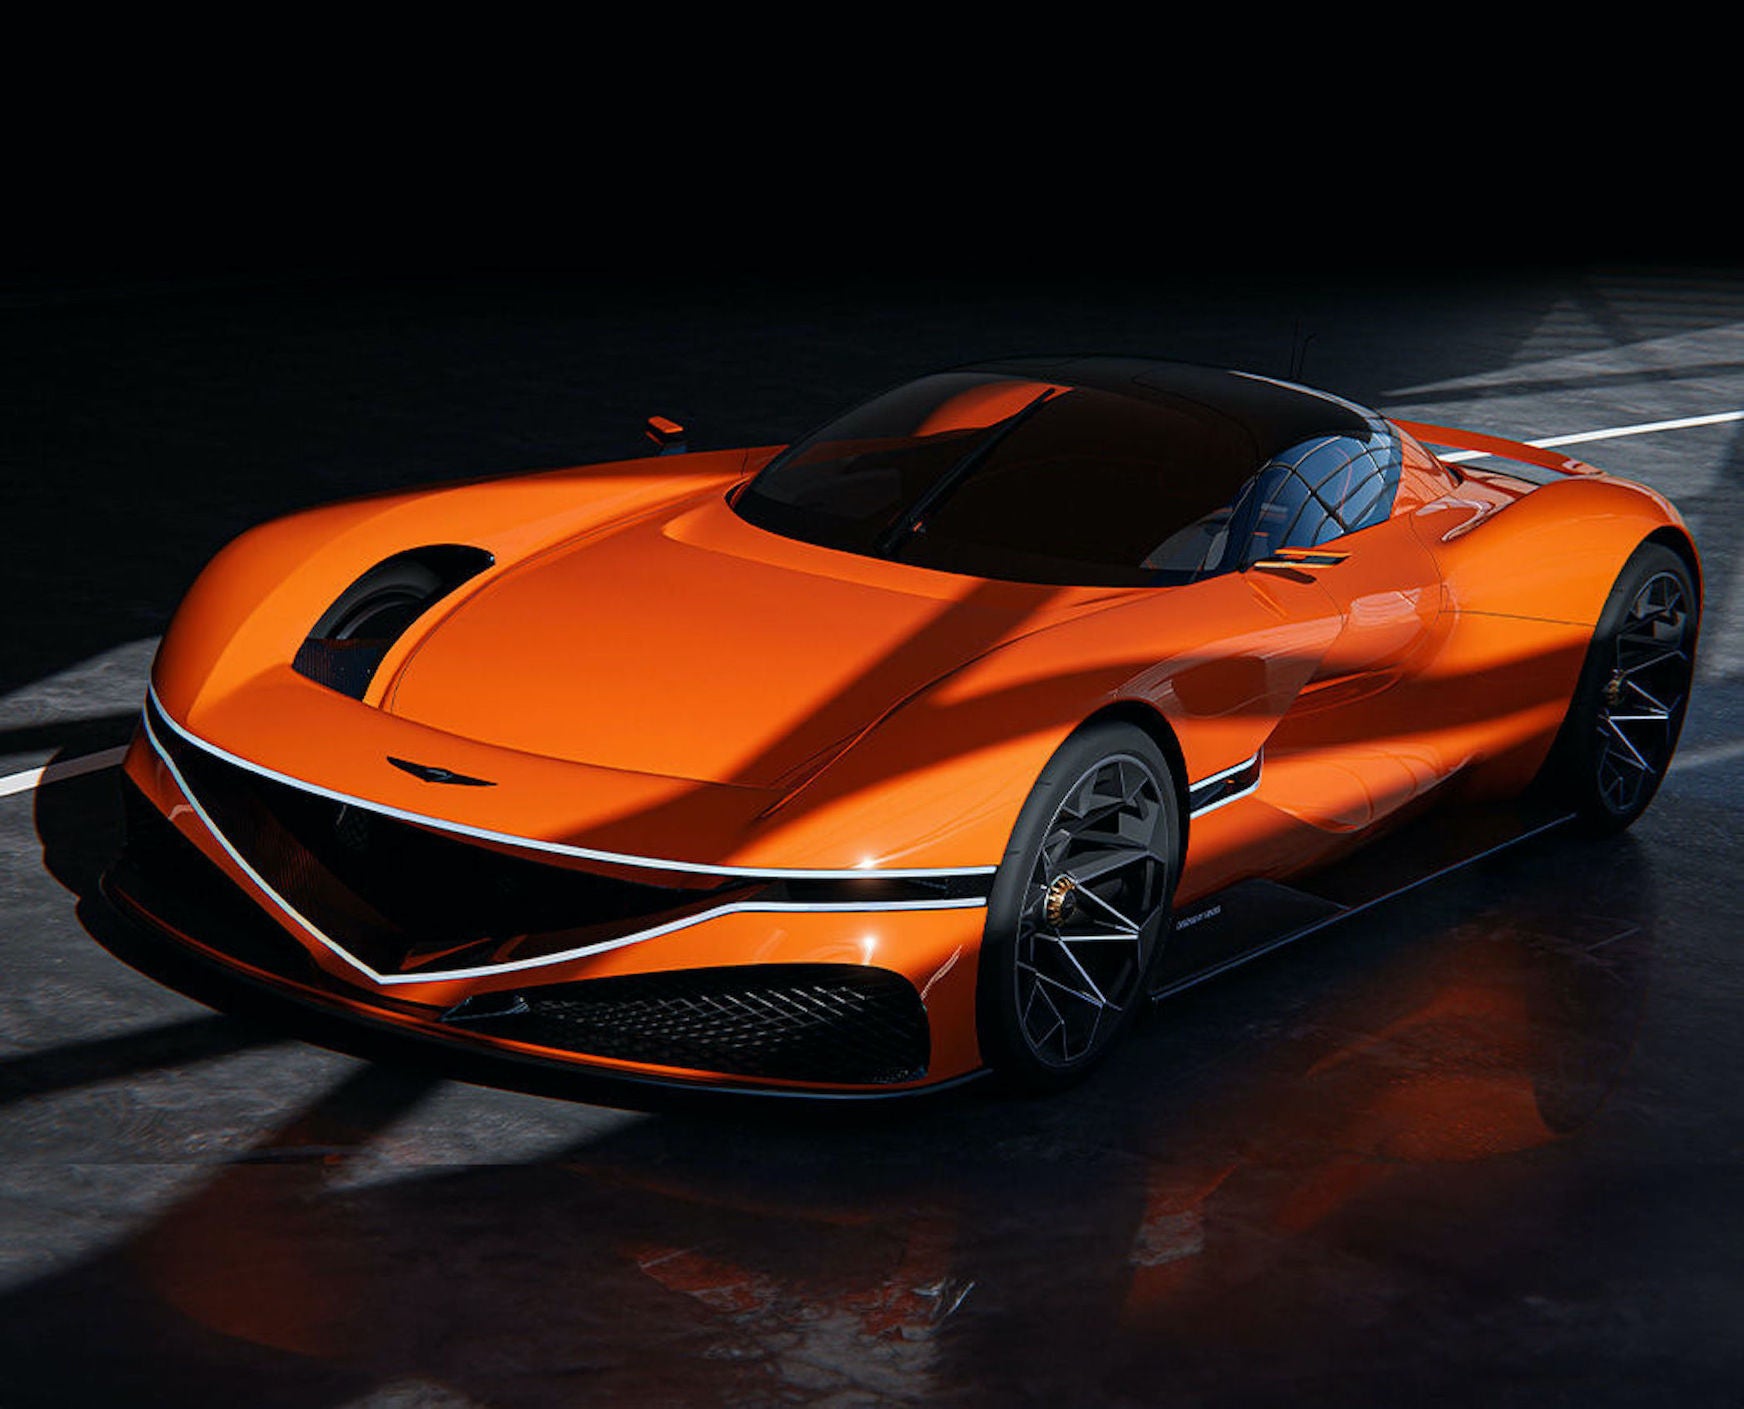 Does X Gran Berlinetta concept preview a future Genesis hypercar?